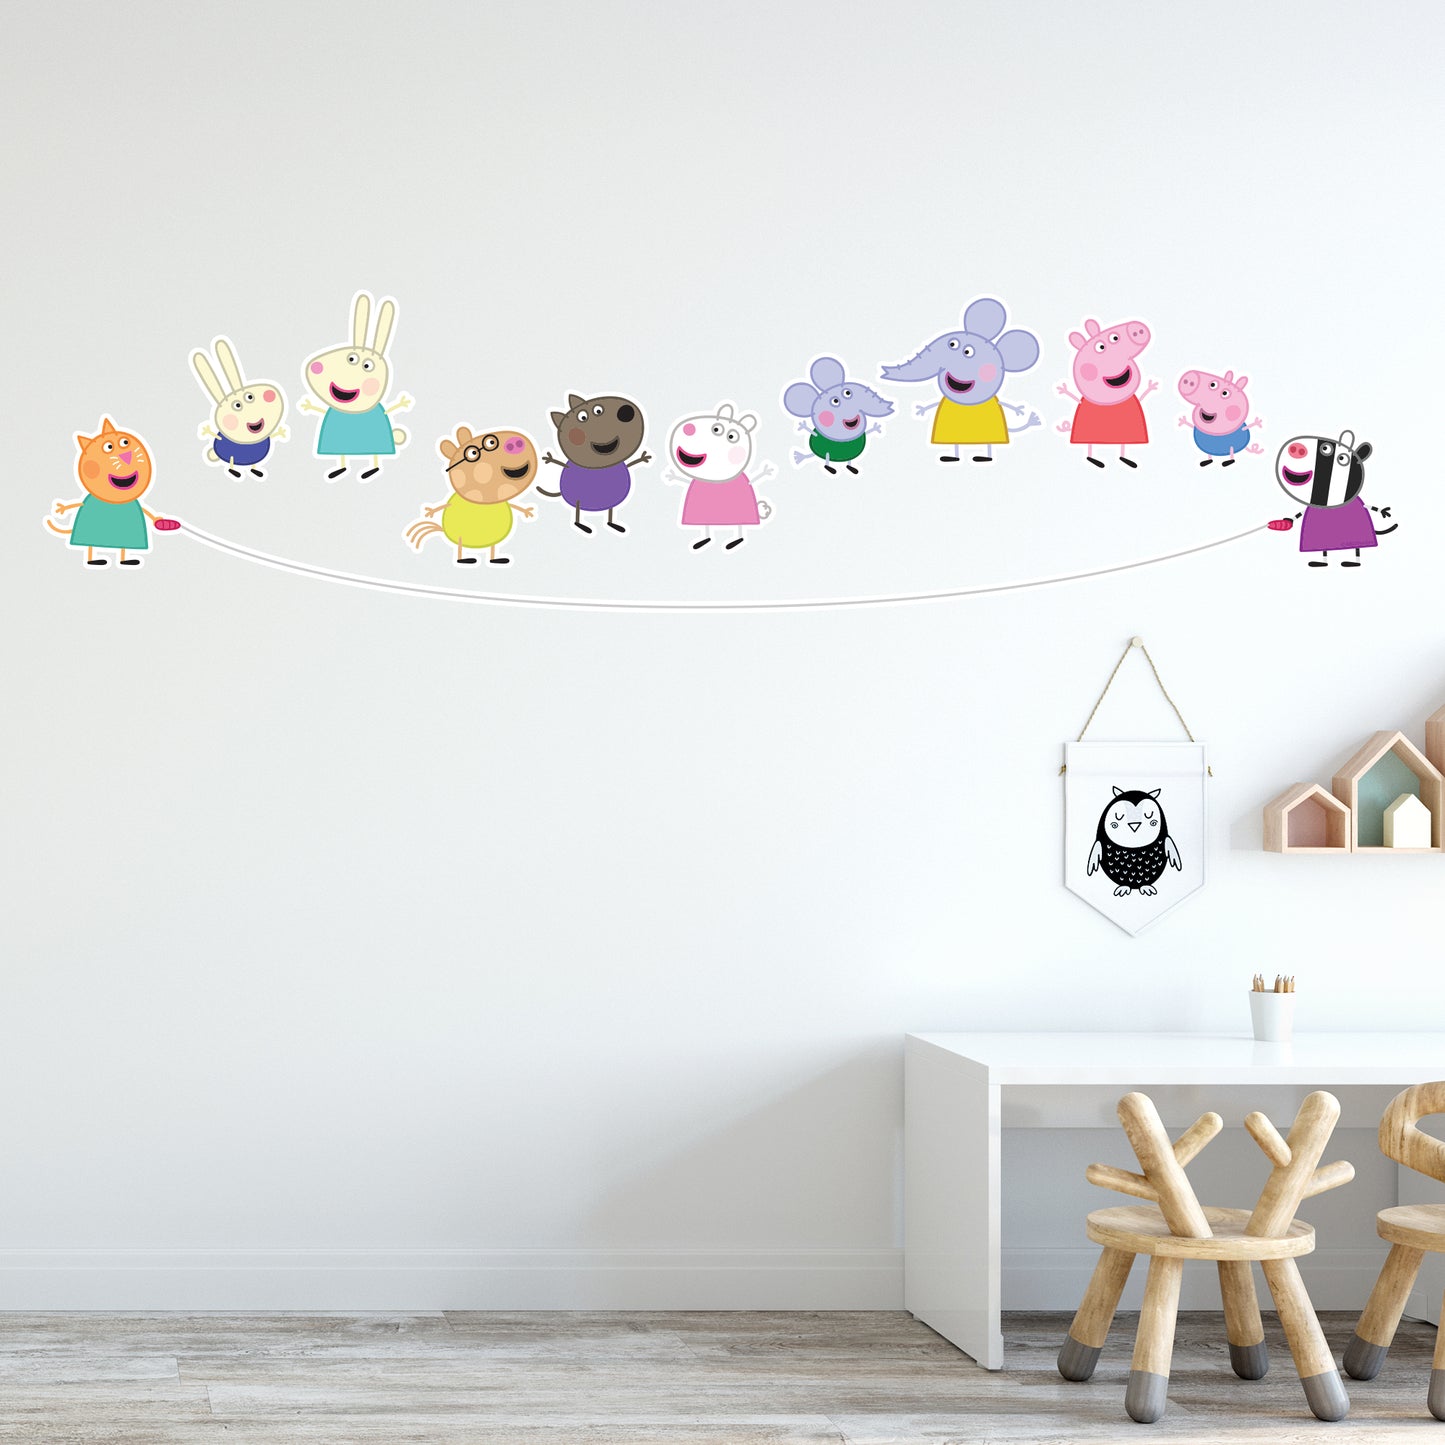 Peppa Pig Wall Sticker - Peppa Pig and Friends Skipping Rope Wall Decal Kids Art